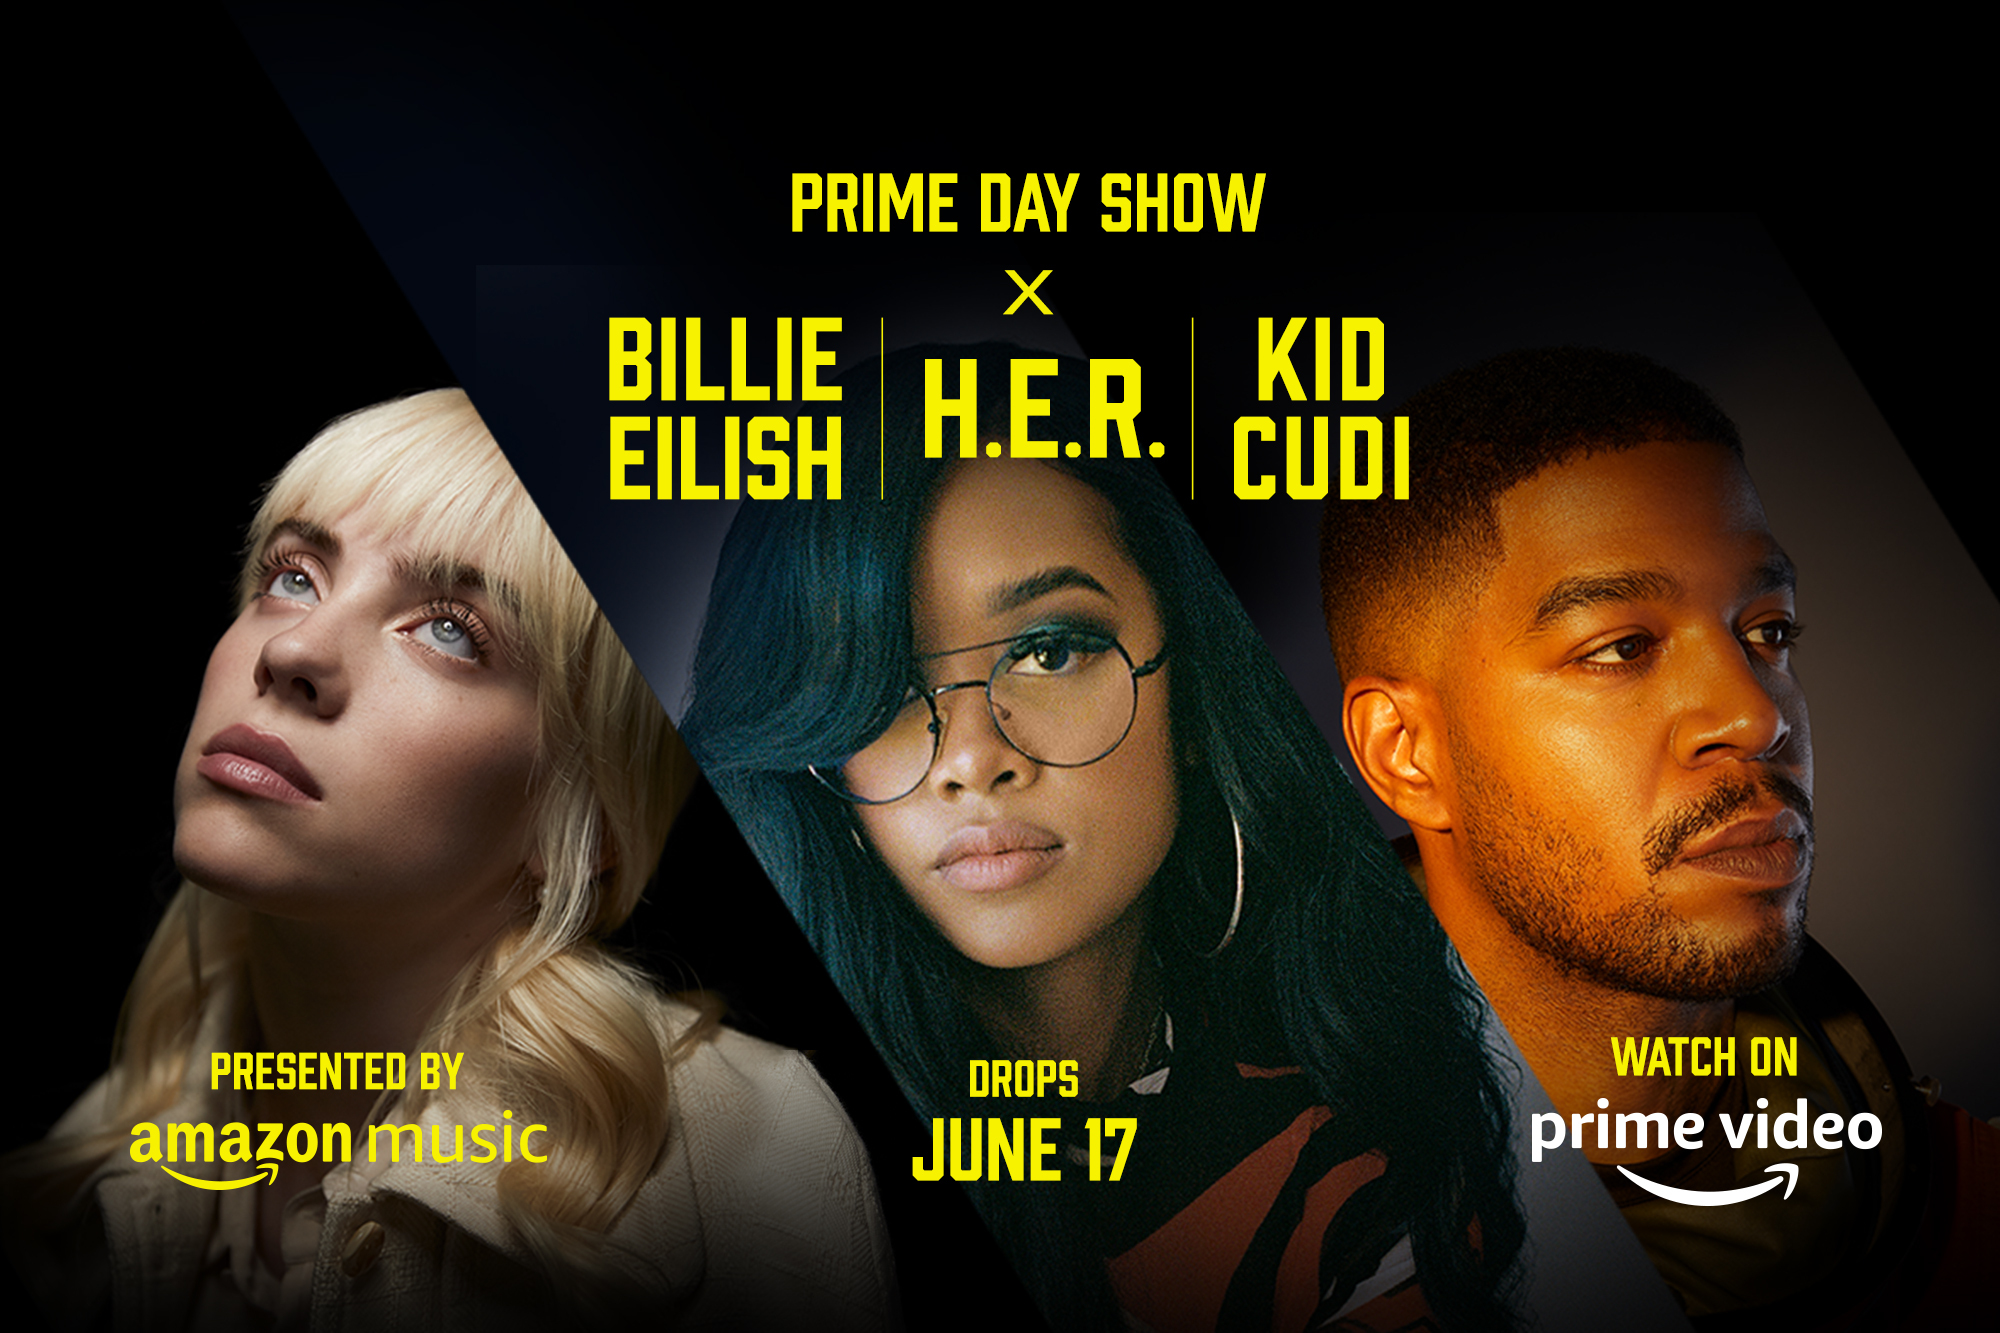 Amazon Announces Prime Day Show Featuring H.E.R., Billie Eilish and Kid